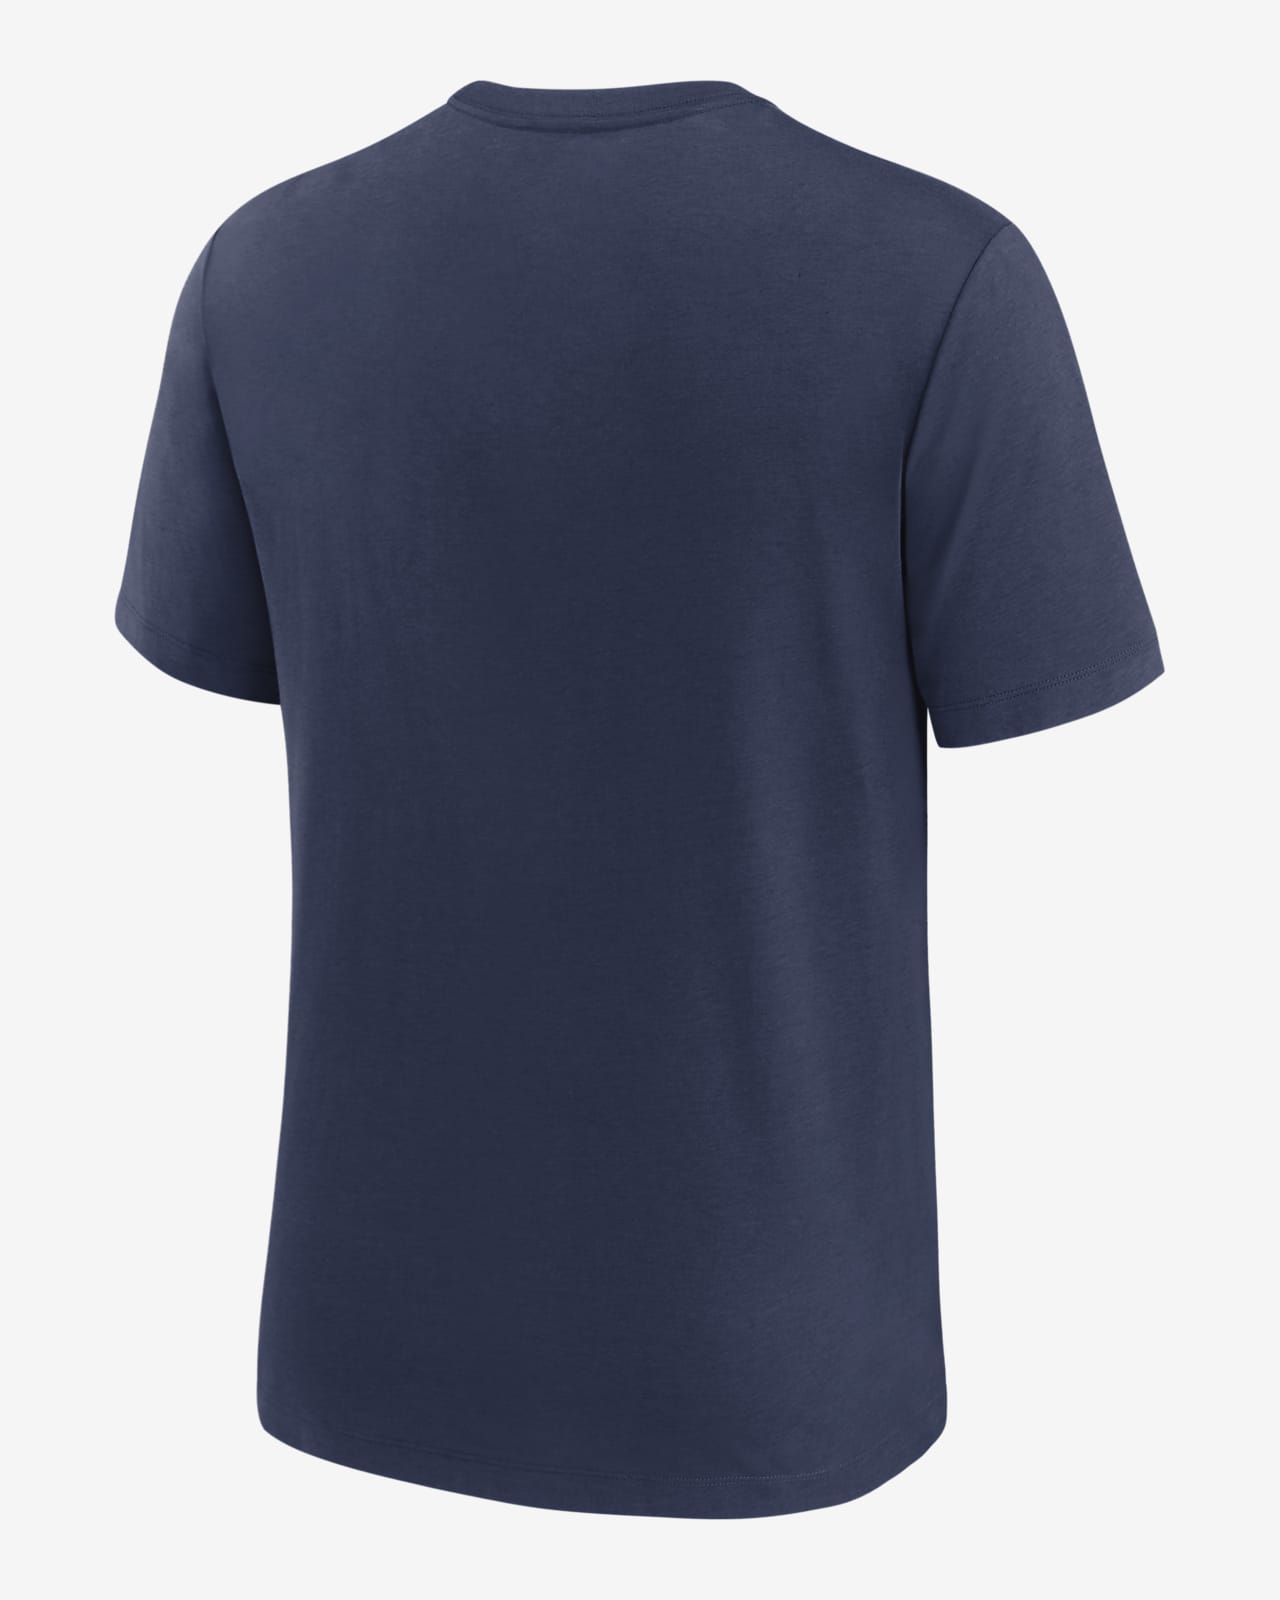 Nike Rewind Retro (MLB New York Yankees) Men's T-Shirt